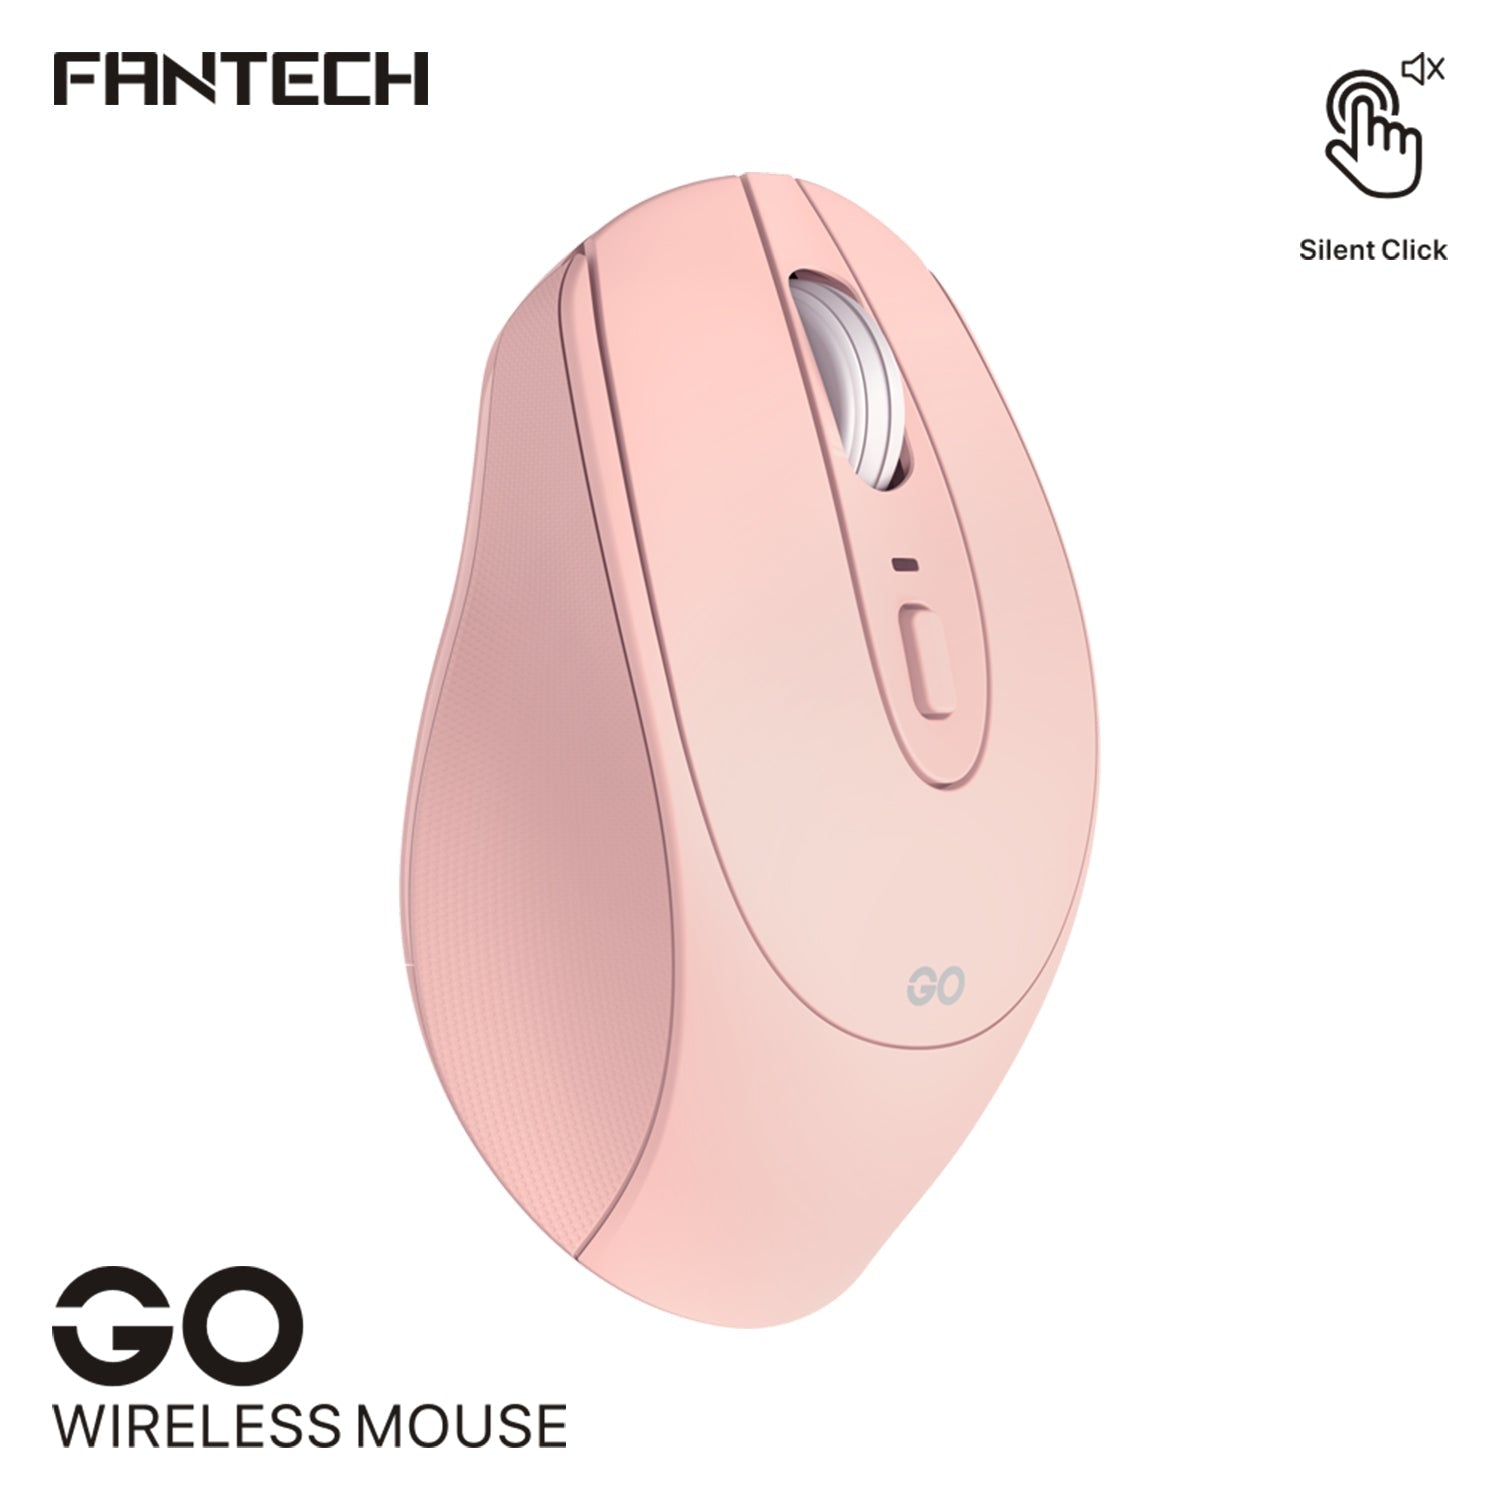 Fantech W191 Wireless Mouse with Silent Click Fantech 8 JOD